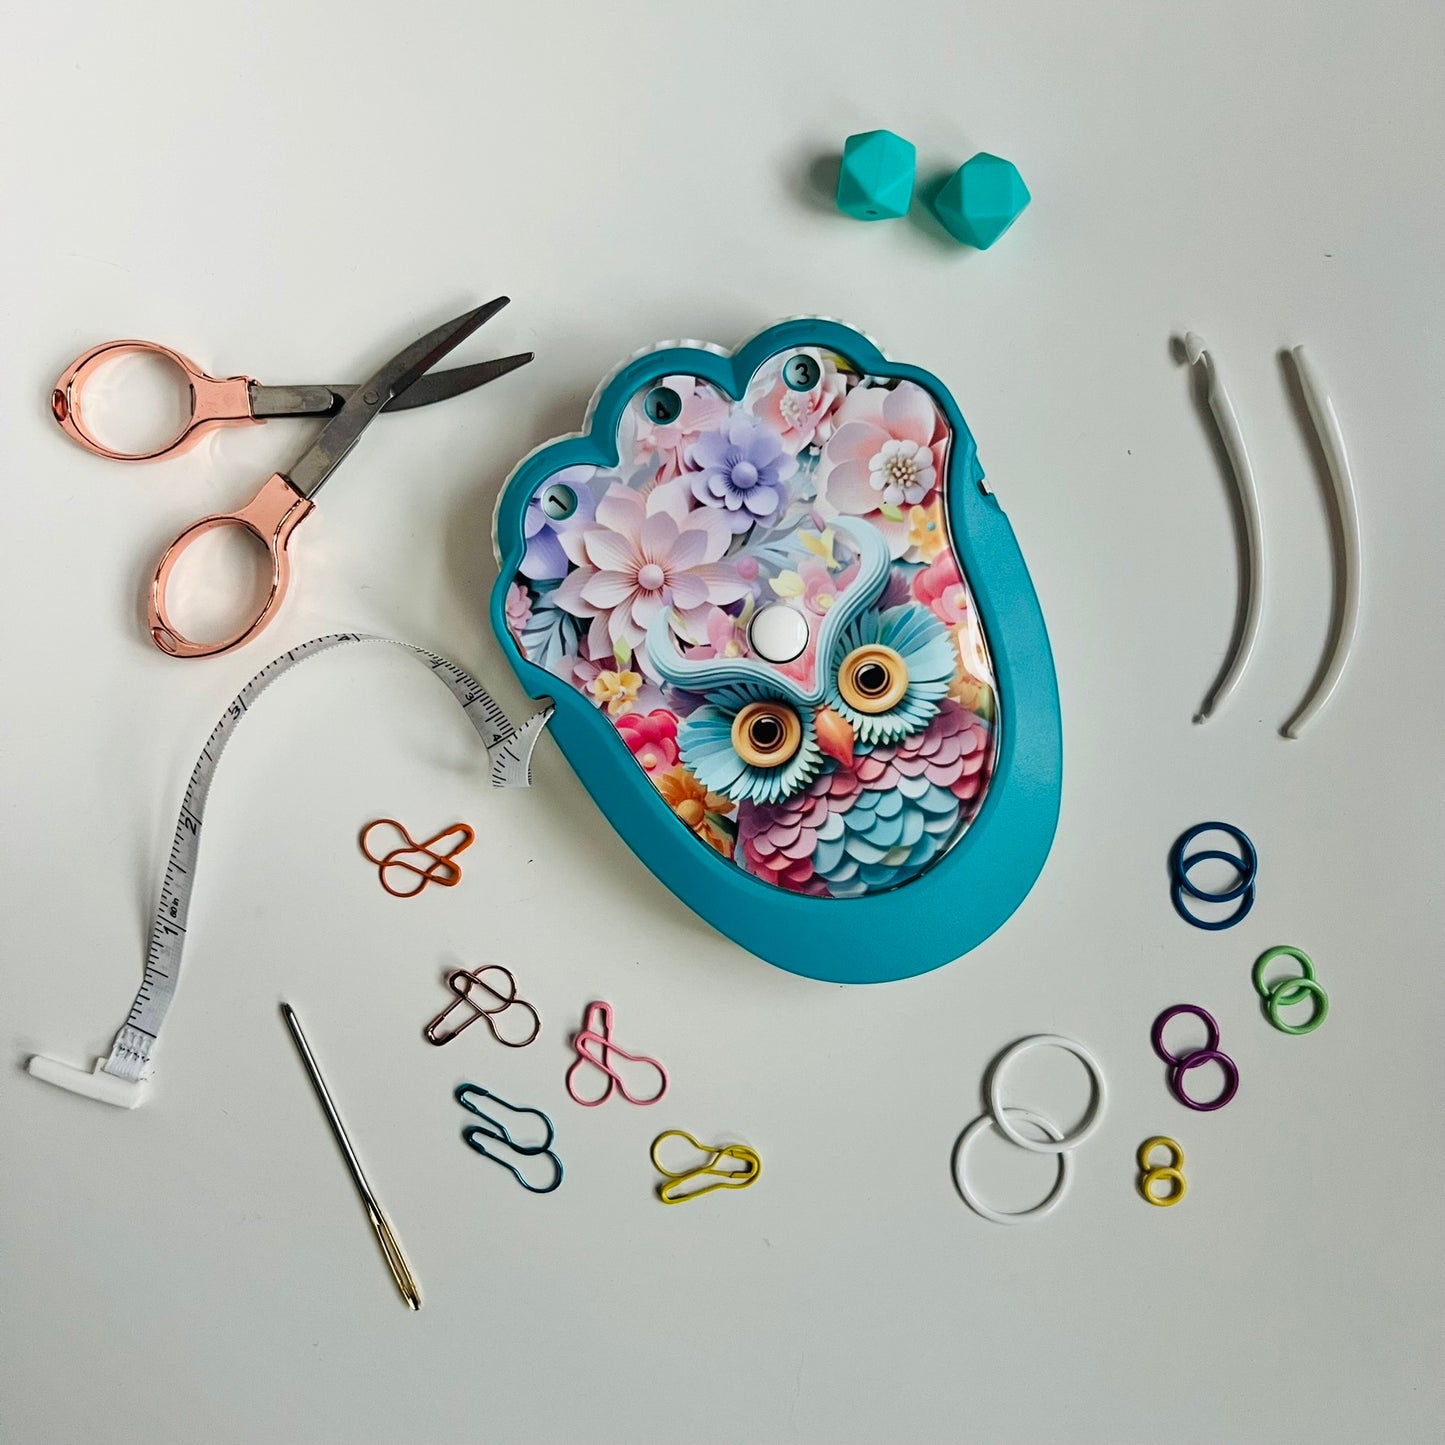 The Knit & Crochet Kit - Hoot